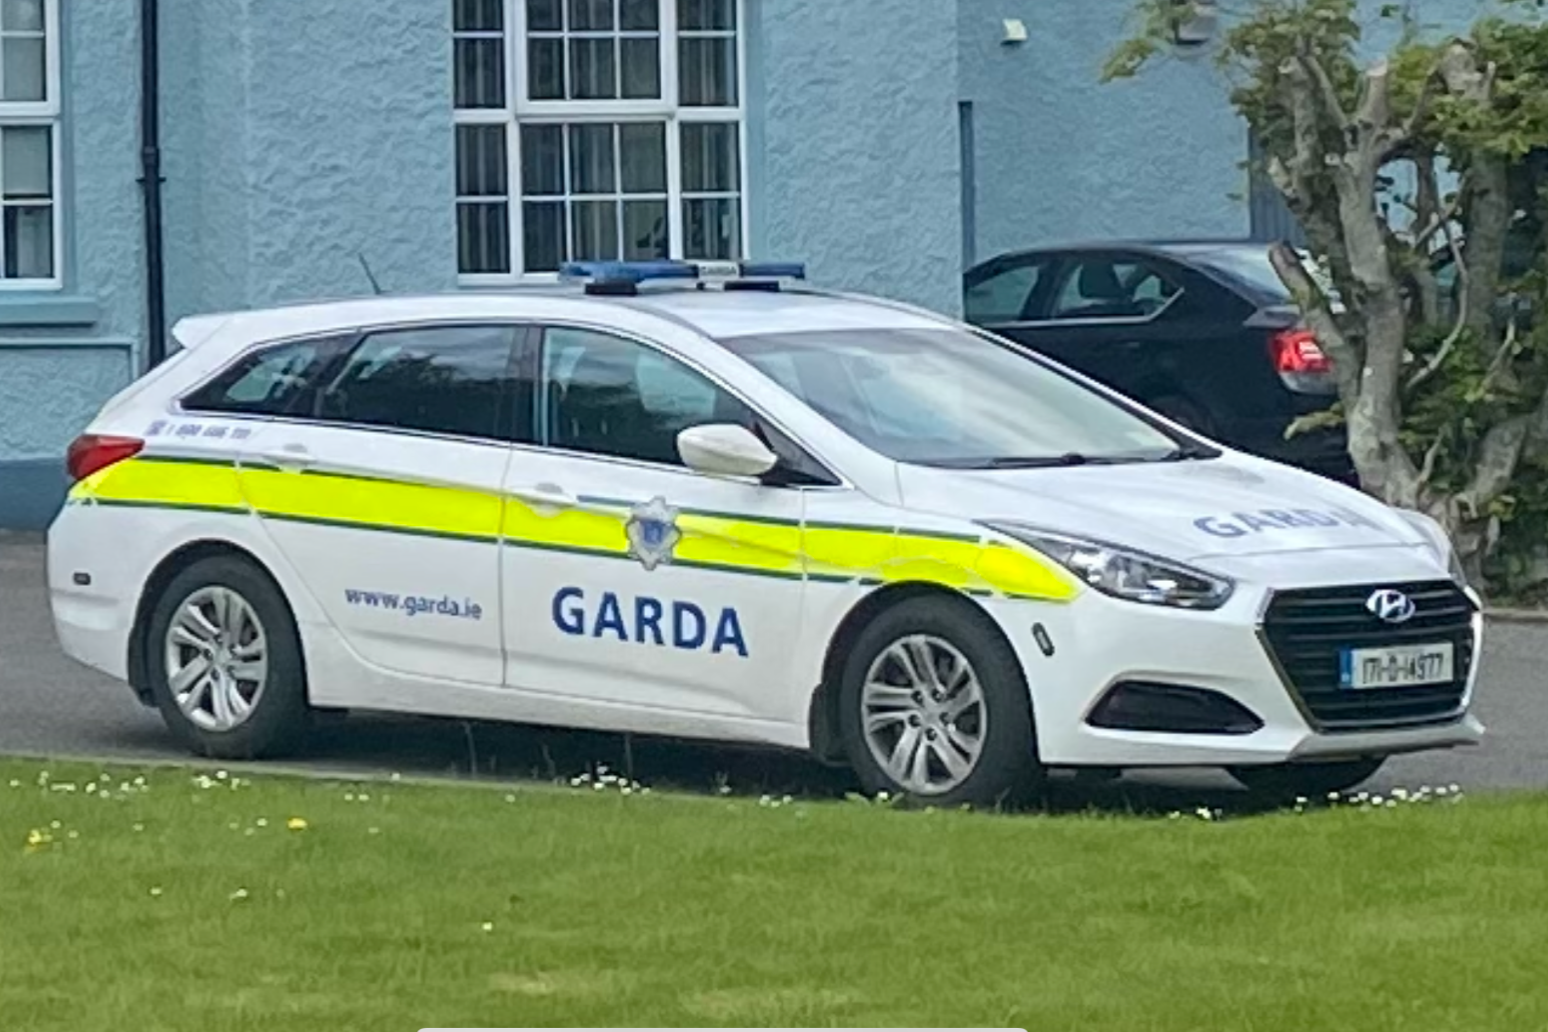 British toddler killed by car while on Irish holiday